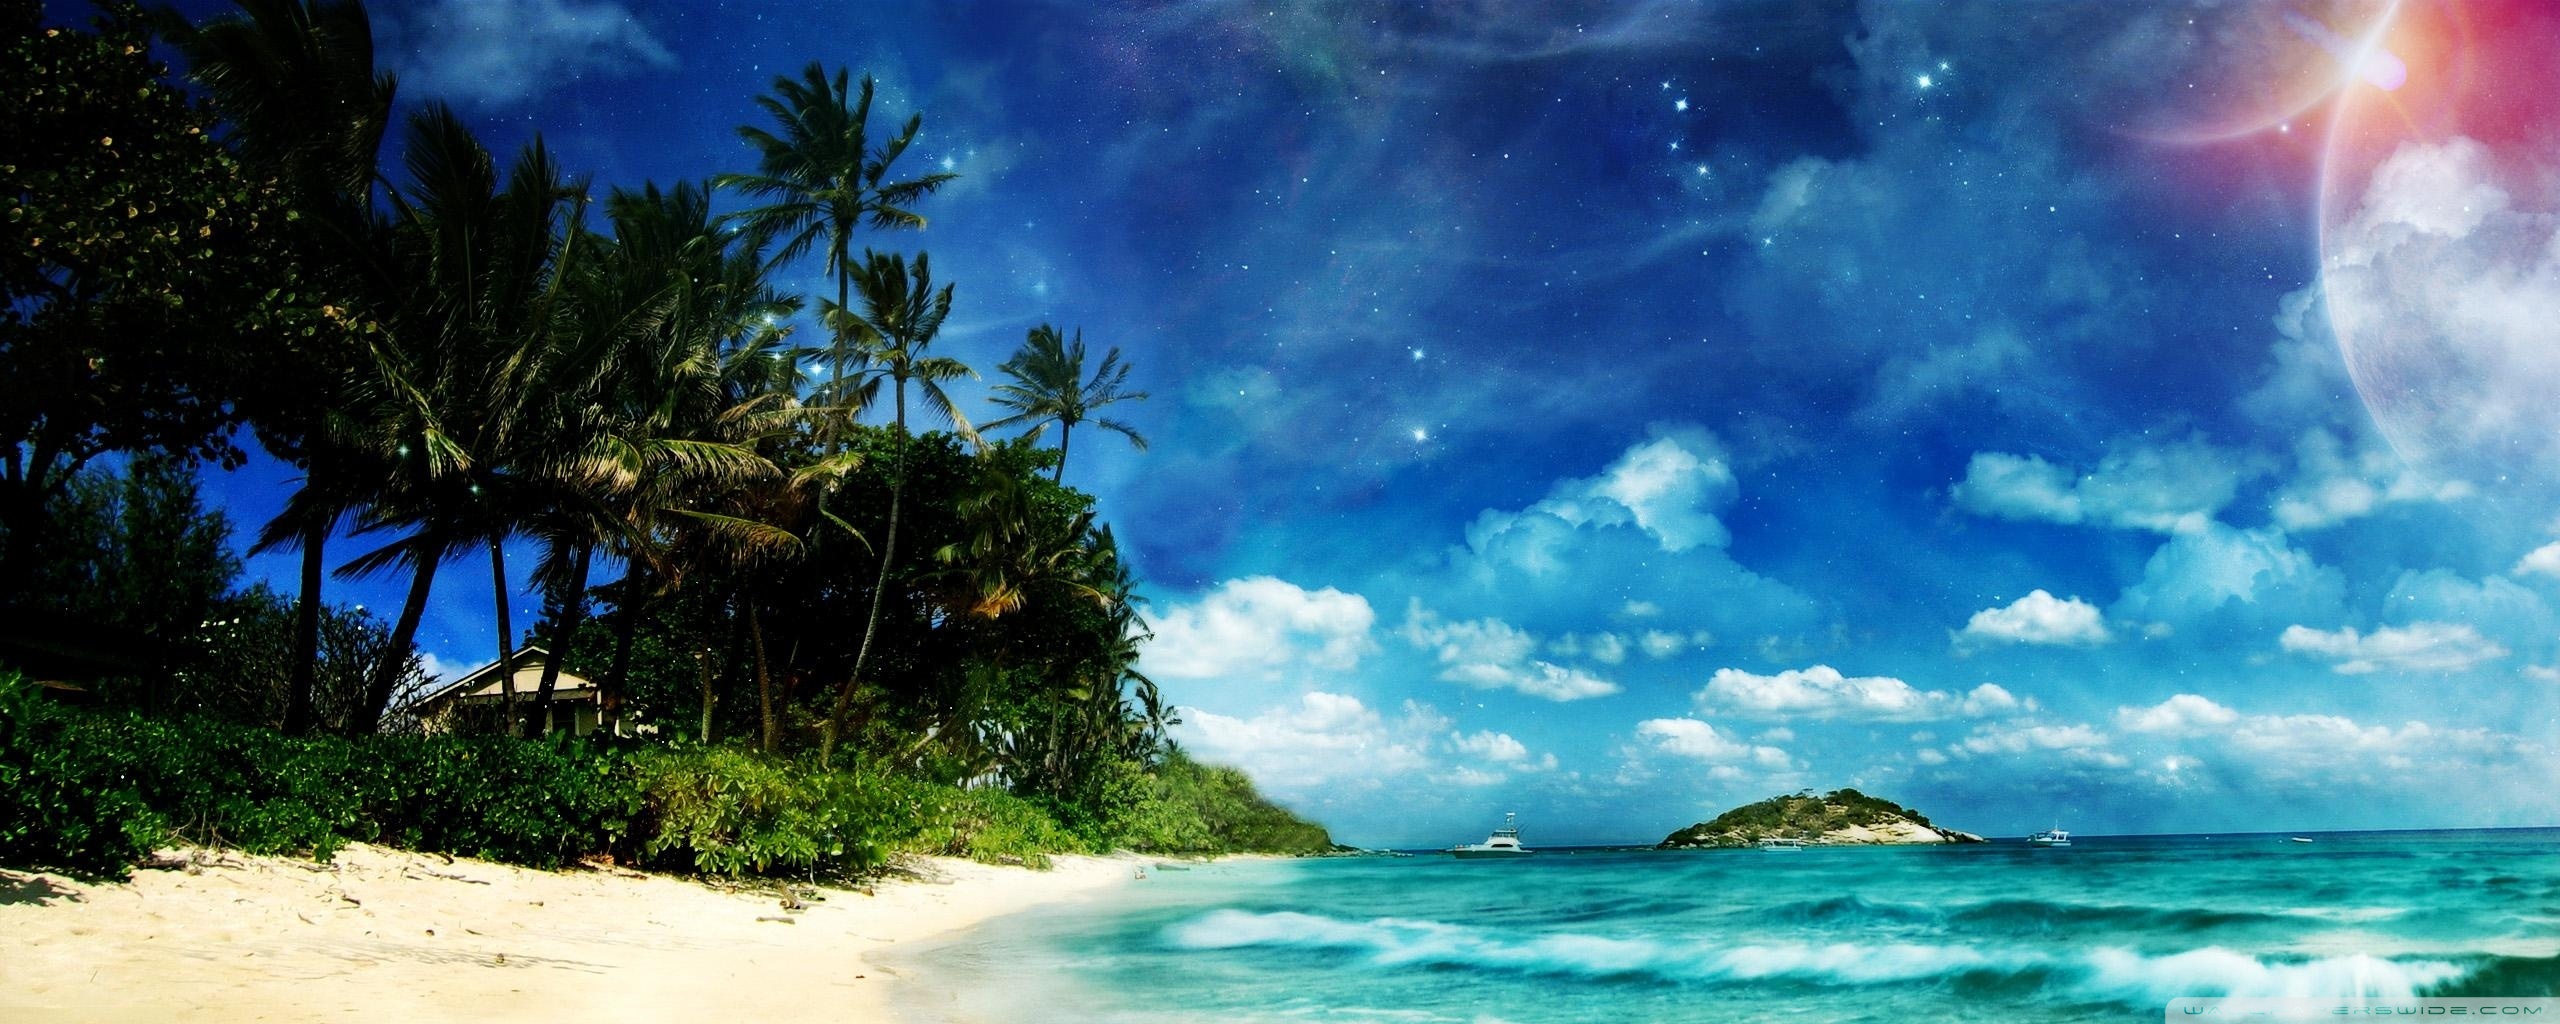 Surreal Beach Ultra HD Desktop Background Wallpaper for Multi